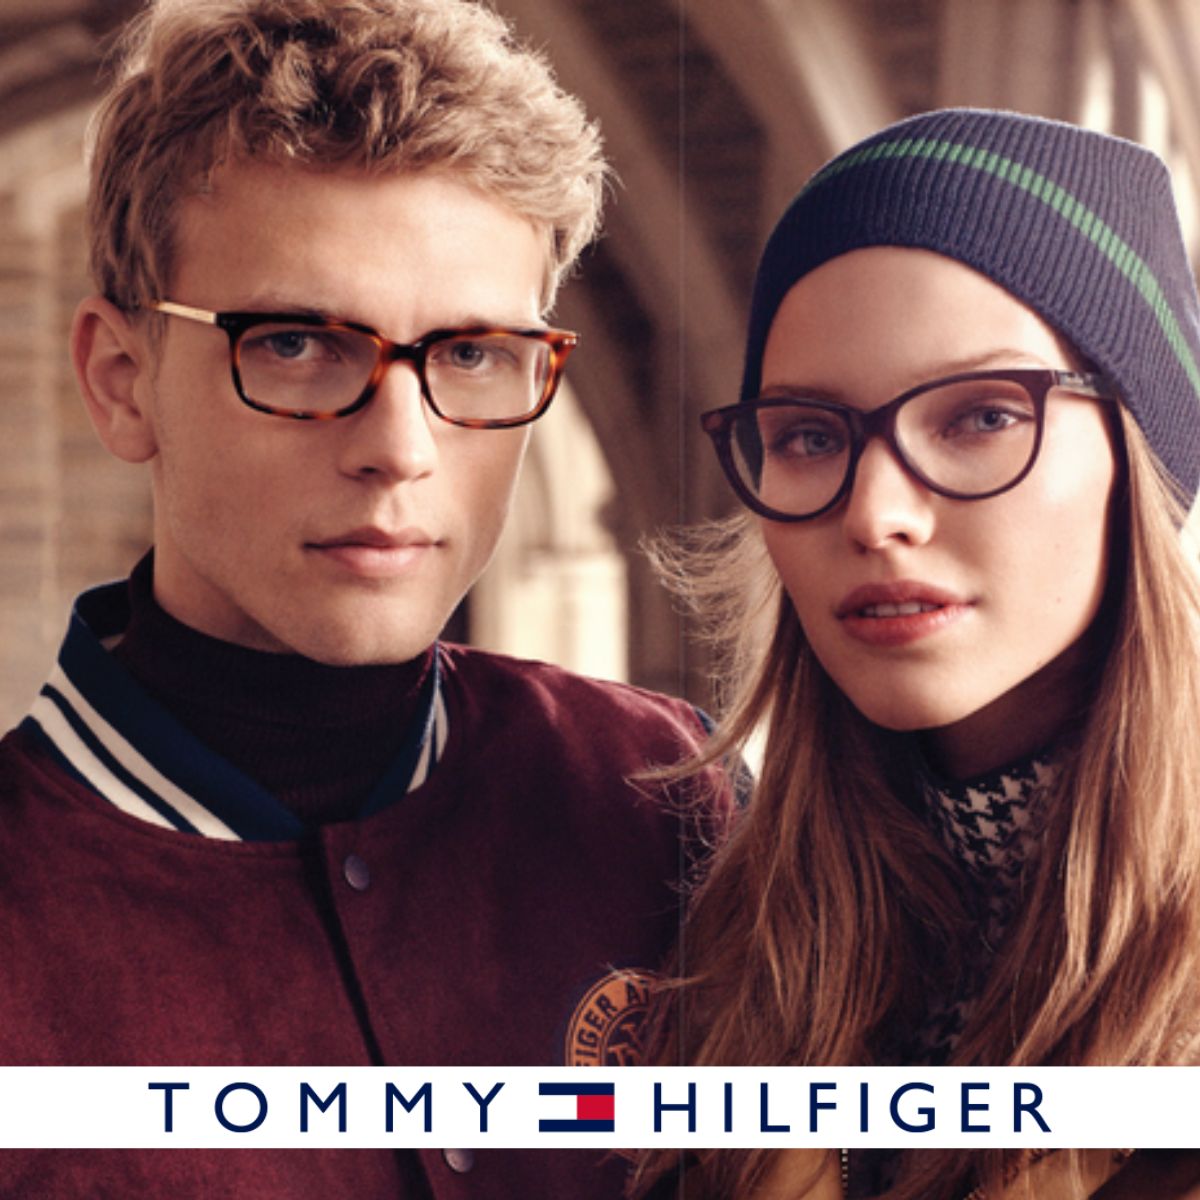 "Buy Tommy Hilfiger Optical Frames (Eyewear Glasses) For Both Men's And Women's | At Optorium"